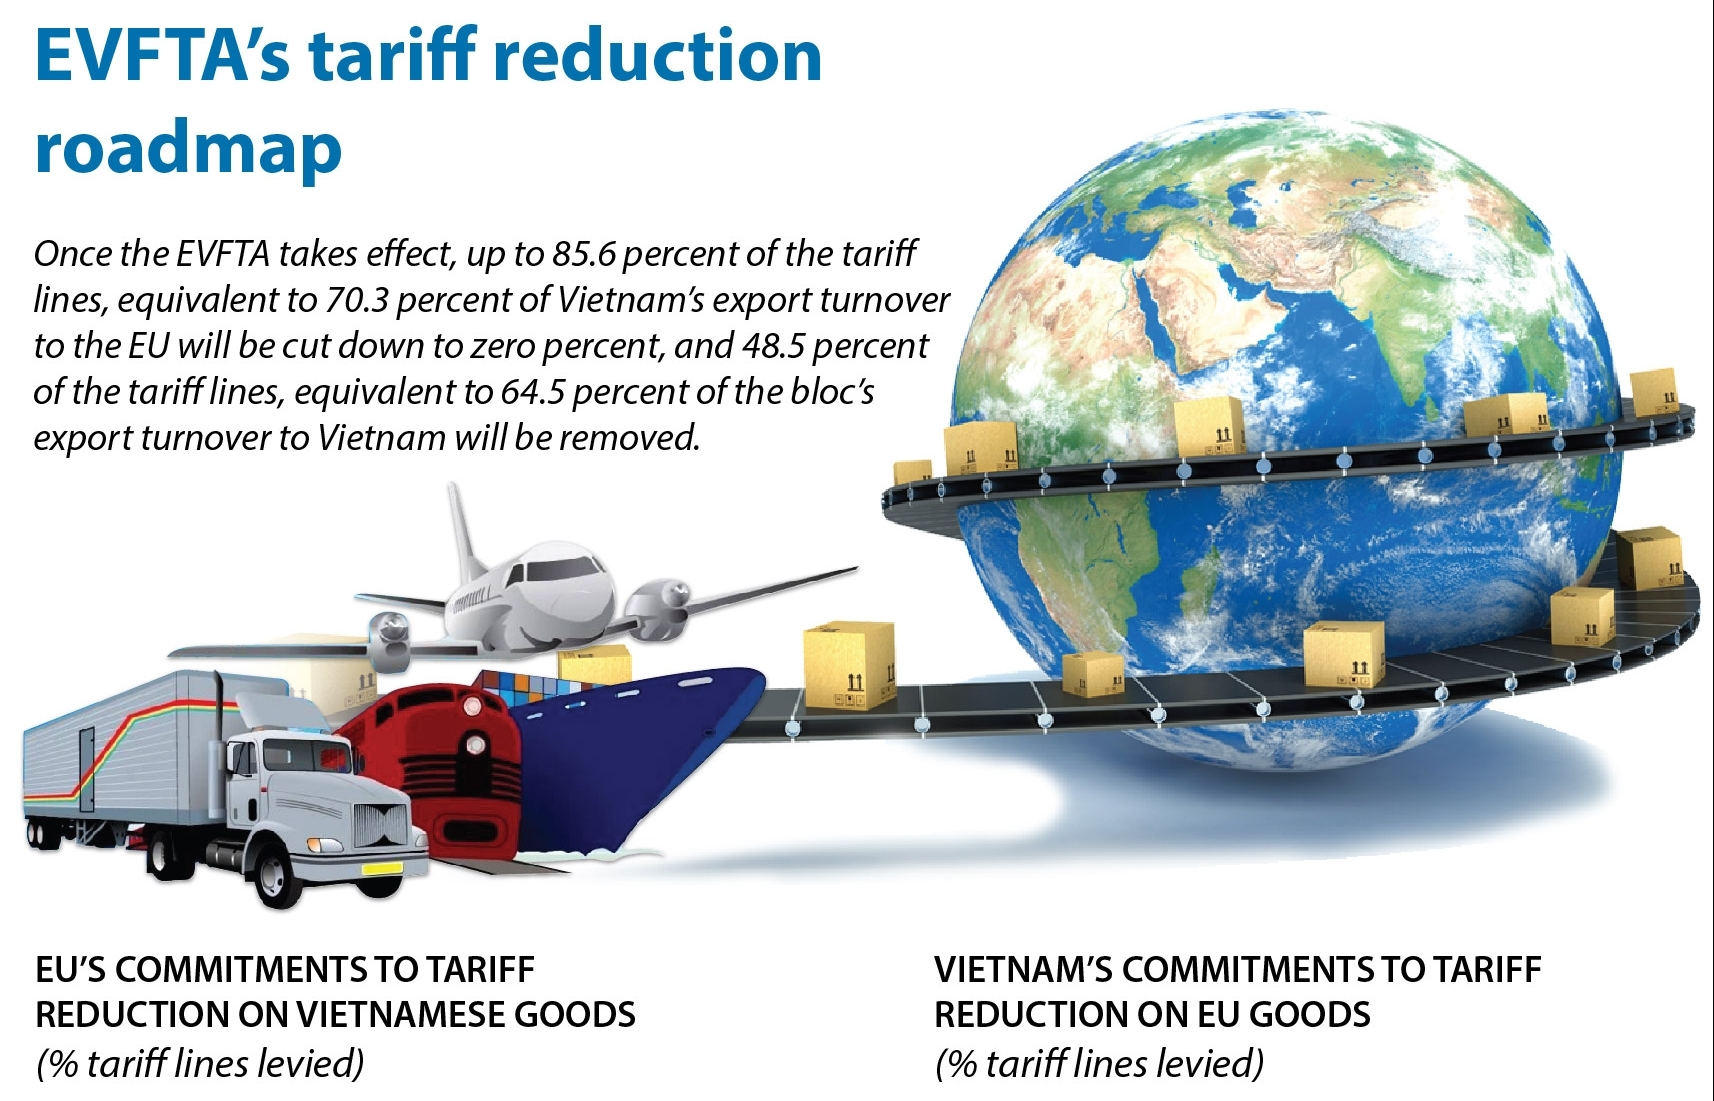 EVFTA’s tariff reduction roadmap